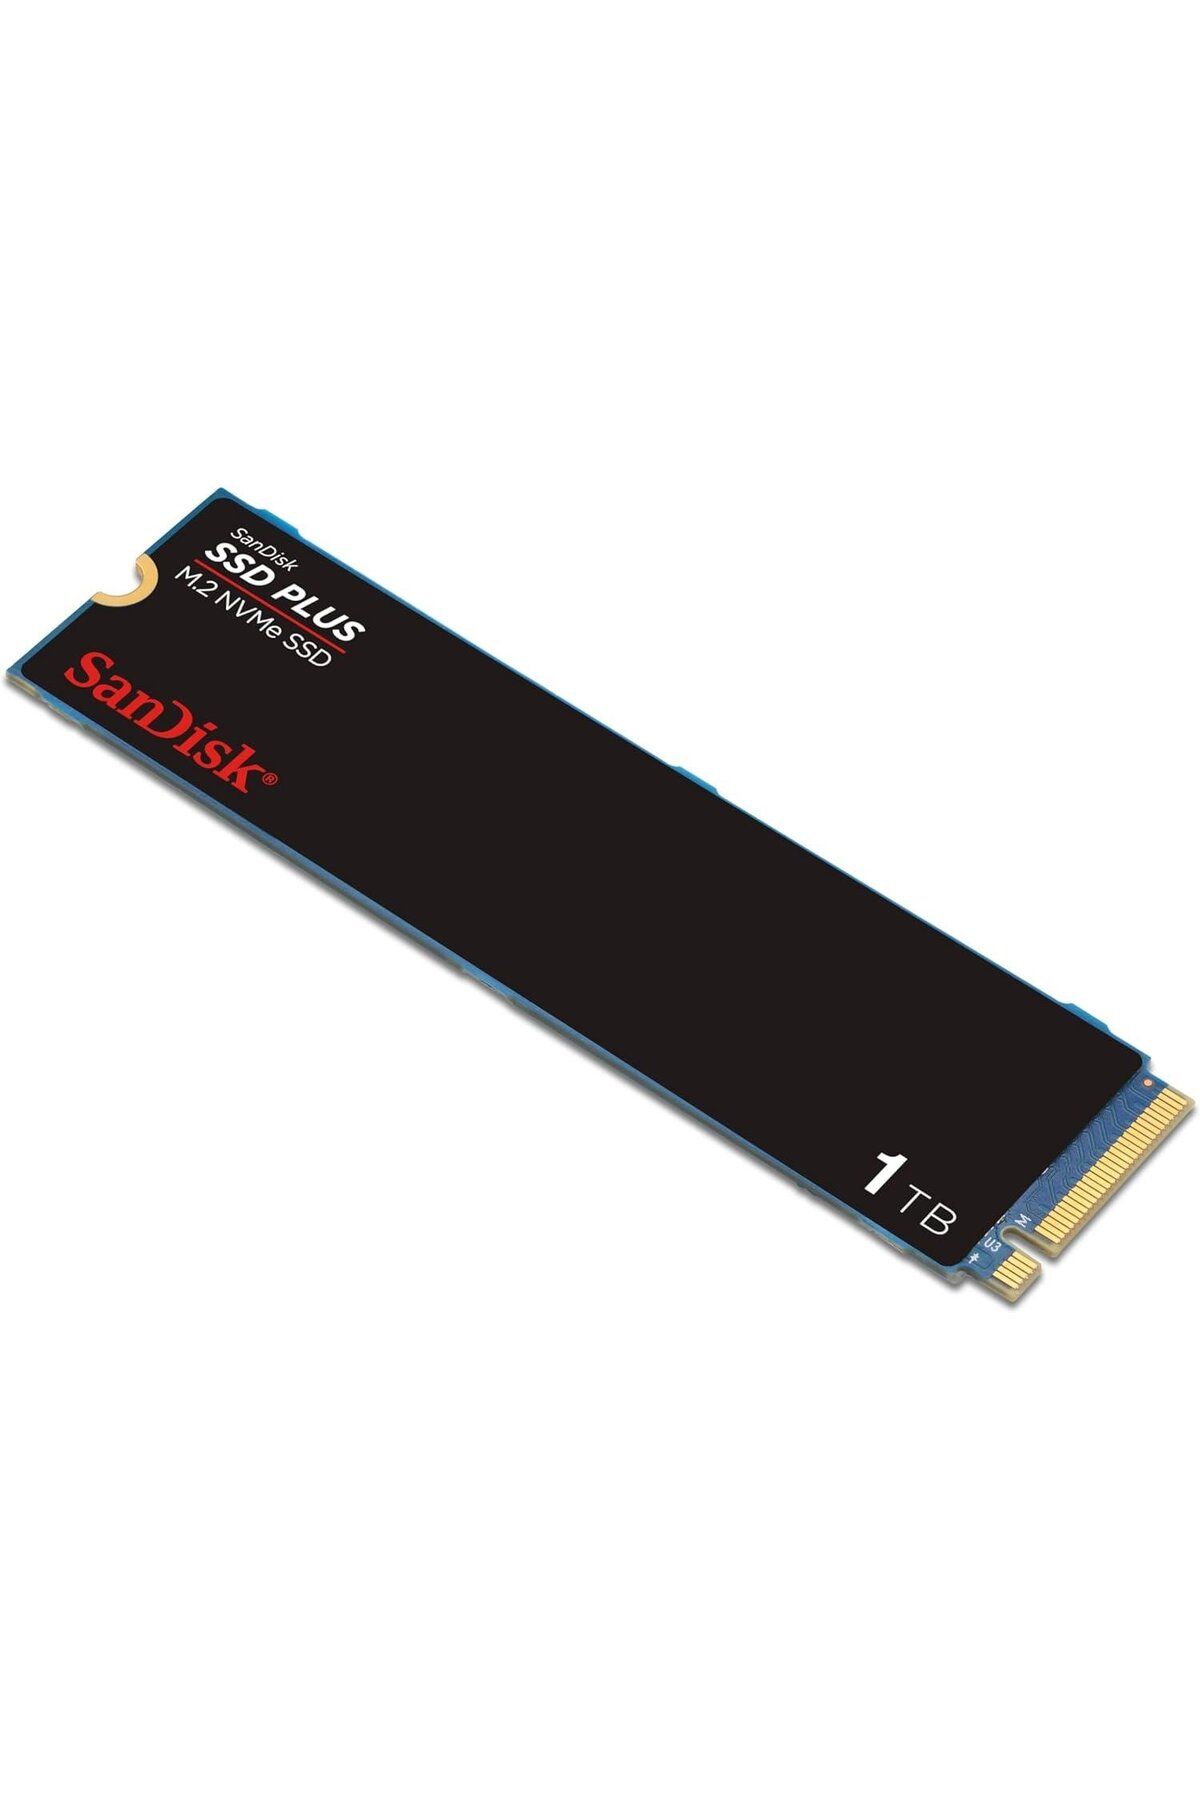 Sandisk SSD Plus 1TB M.2 2280 PCIe Gen3 NVMe SSD 3200 MB/s